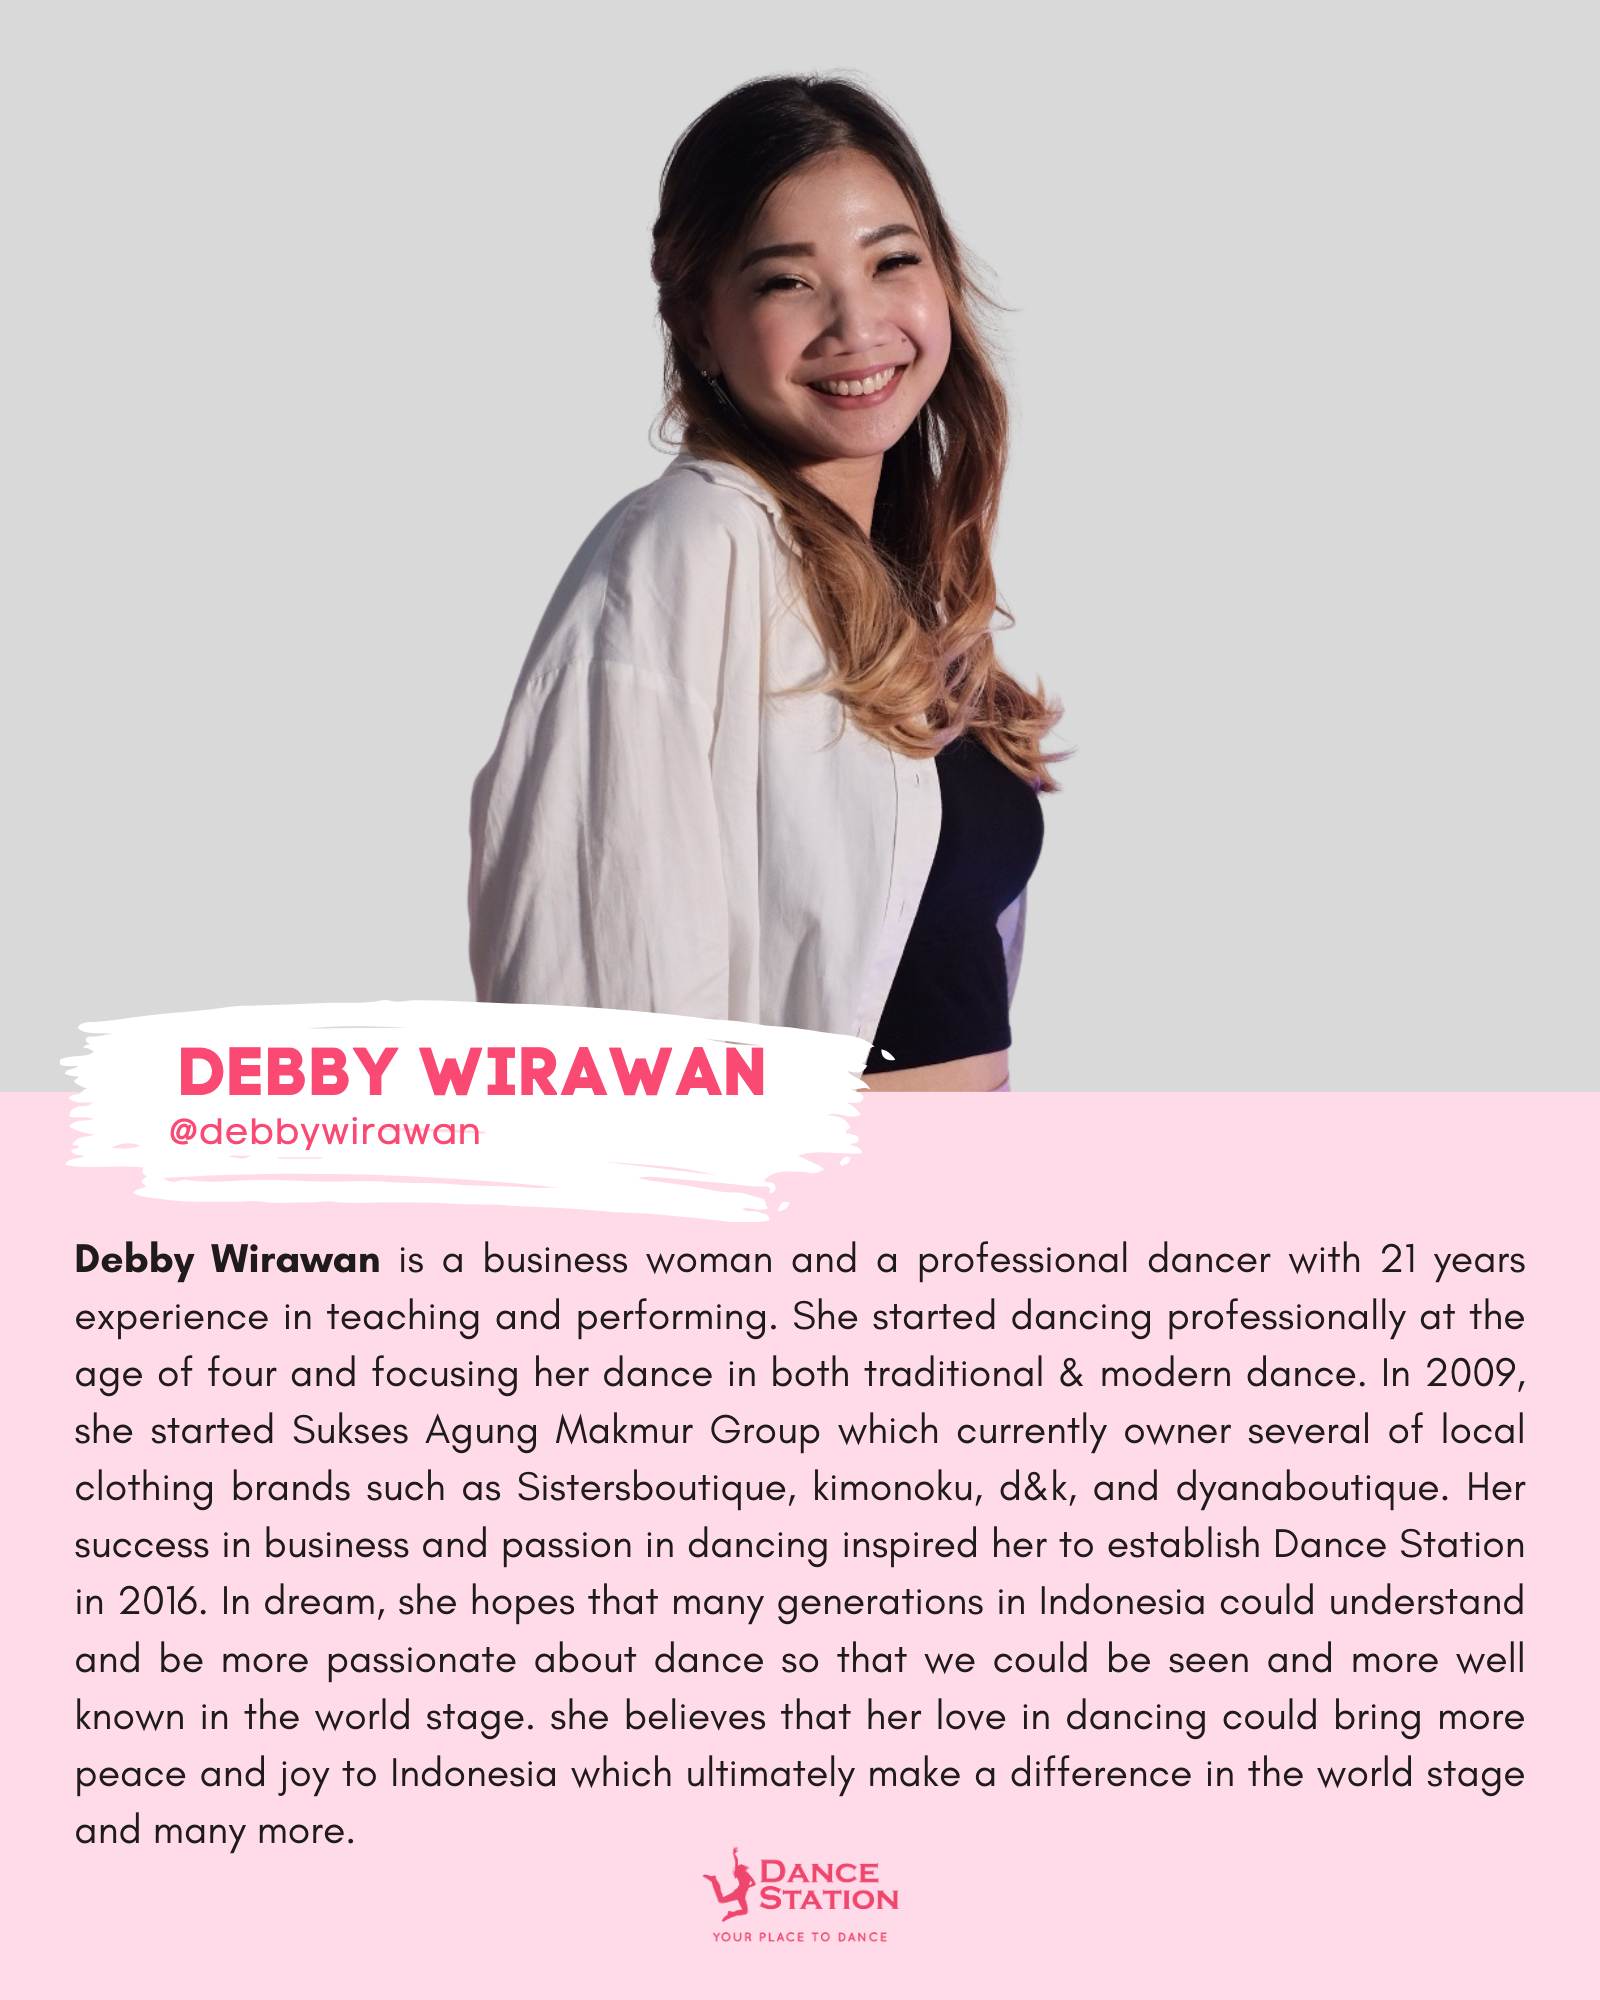 DEBBY WIRAWAN (Ms. Debby)